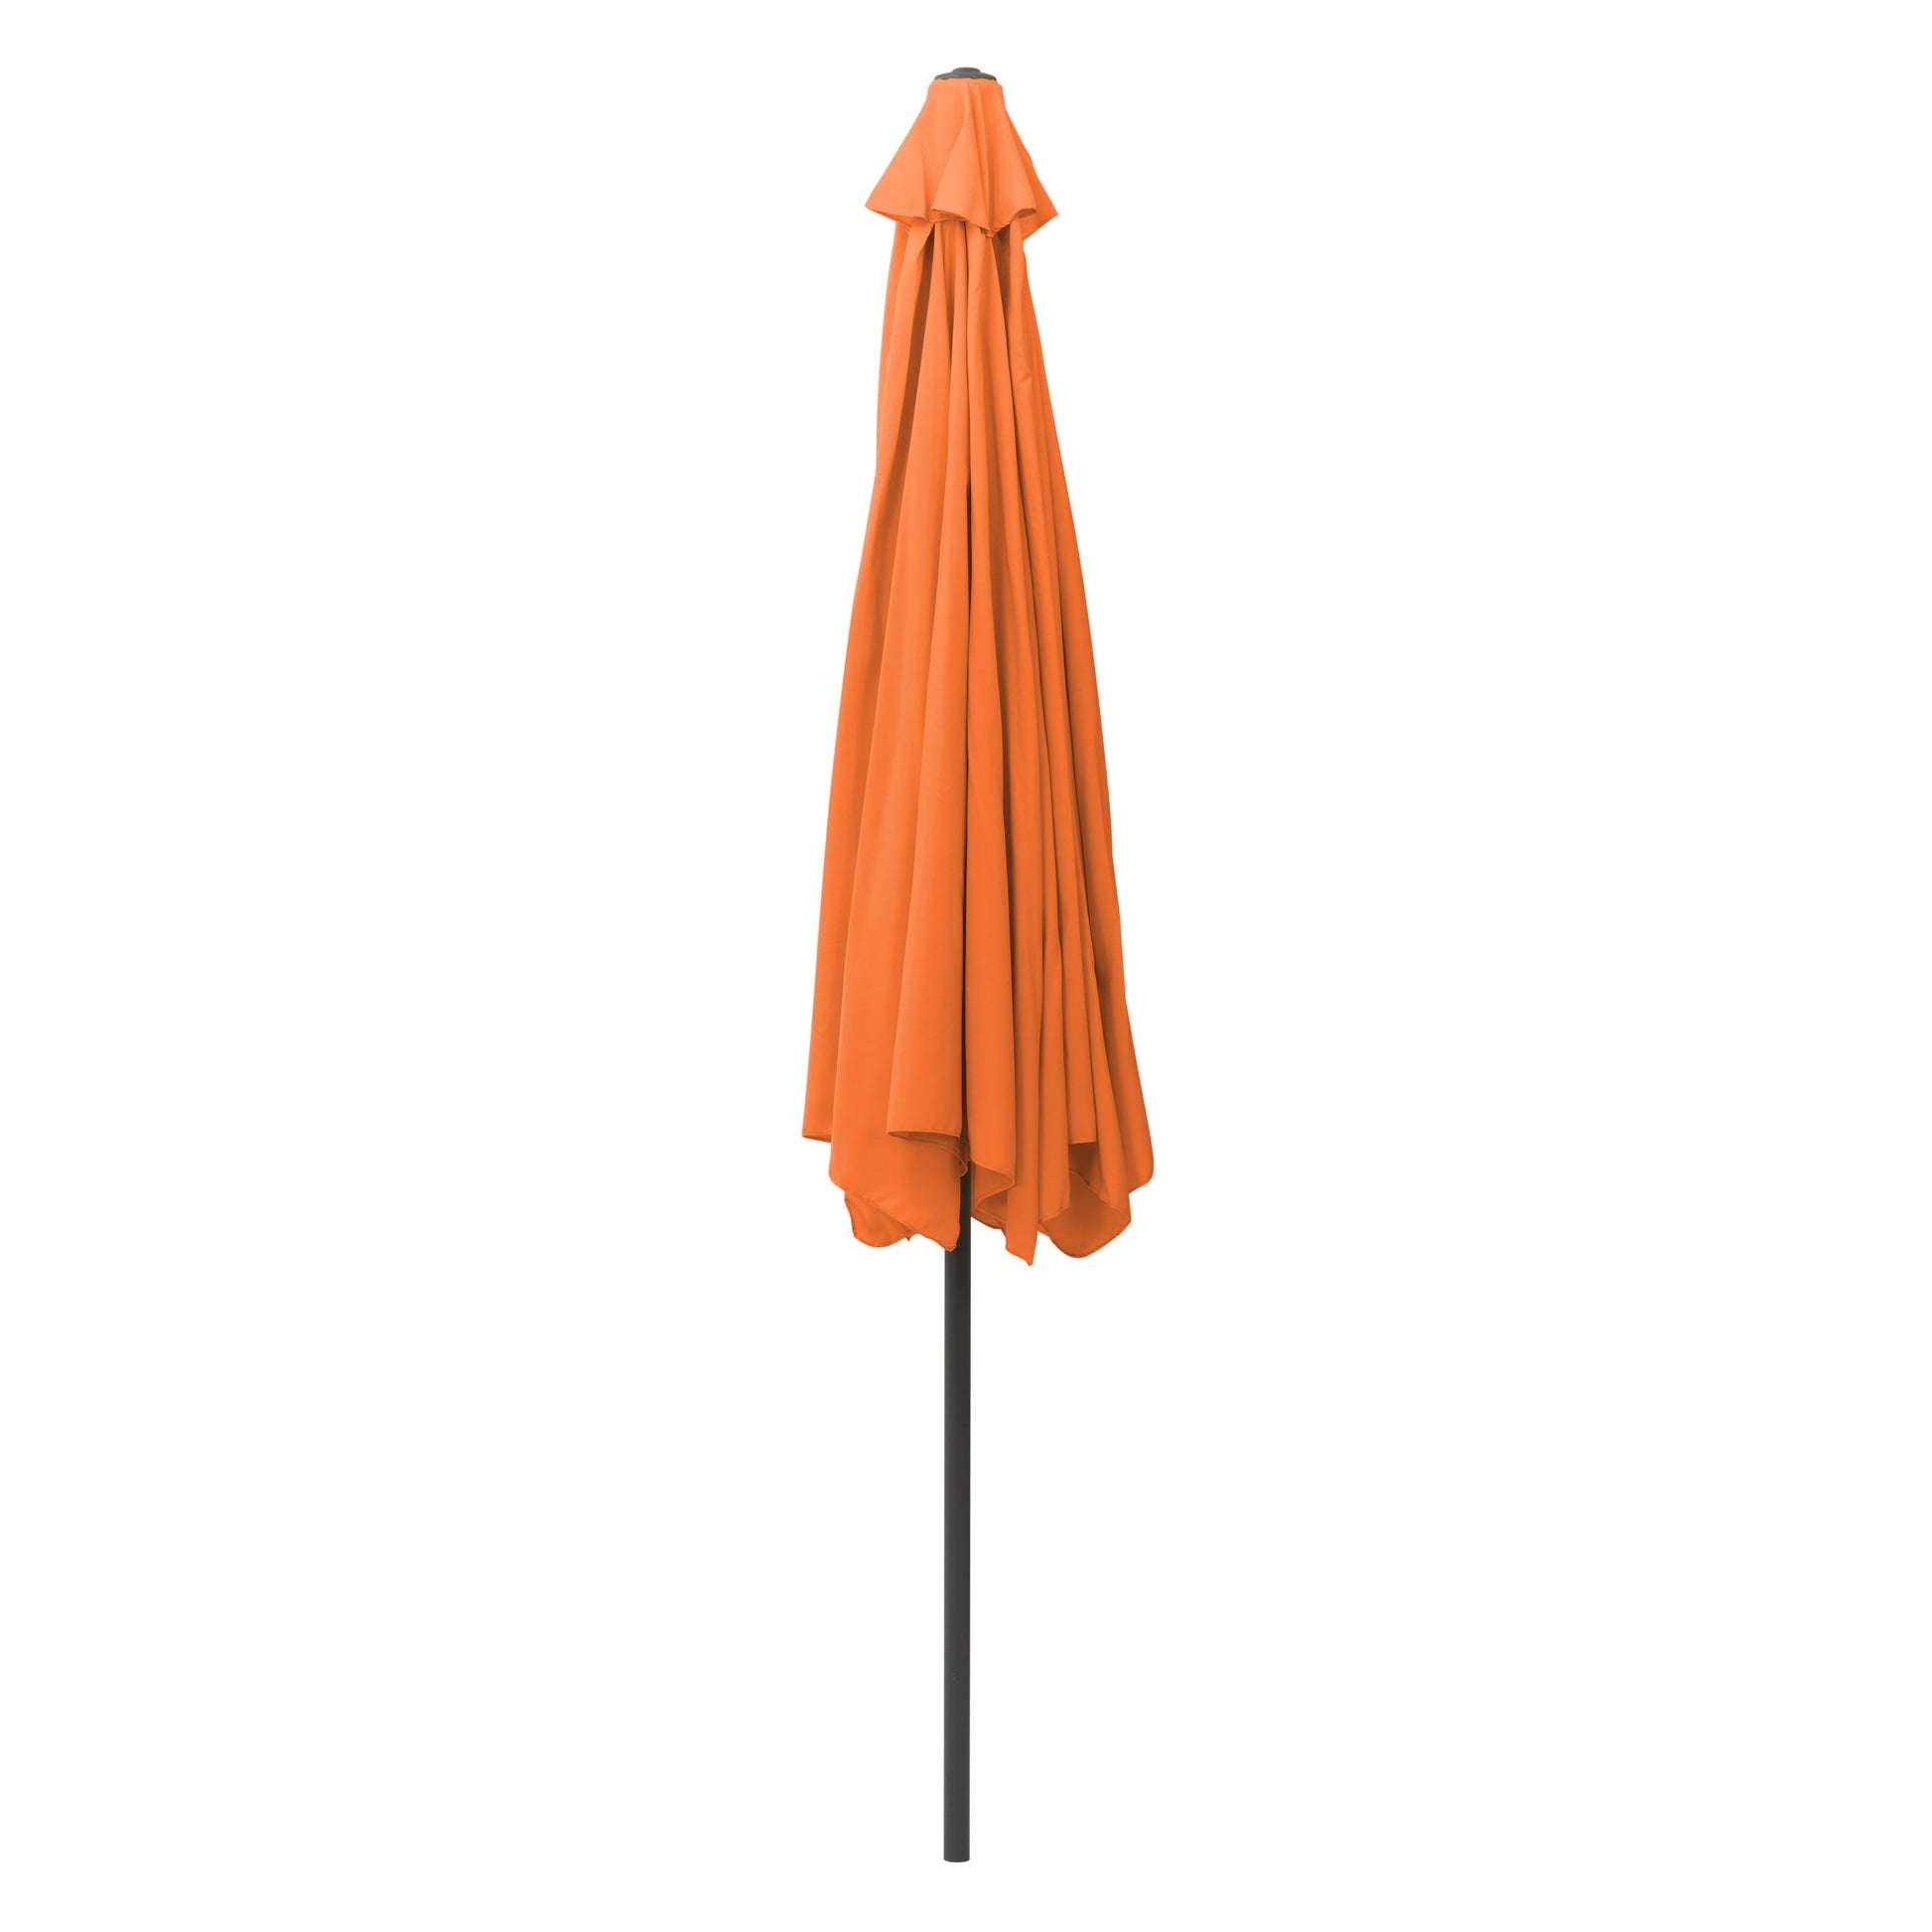 orange 10ft patio umbrella, round tilting with base 200 Series product image CorLiving#color_orange